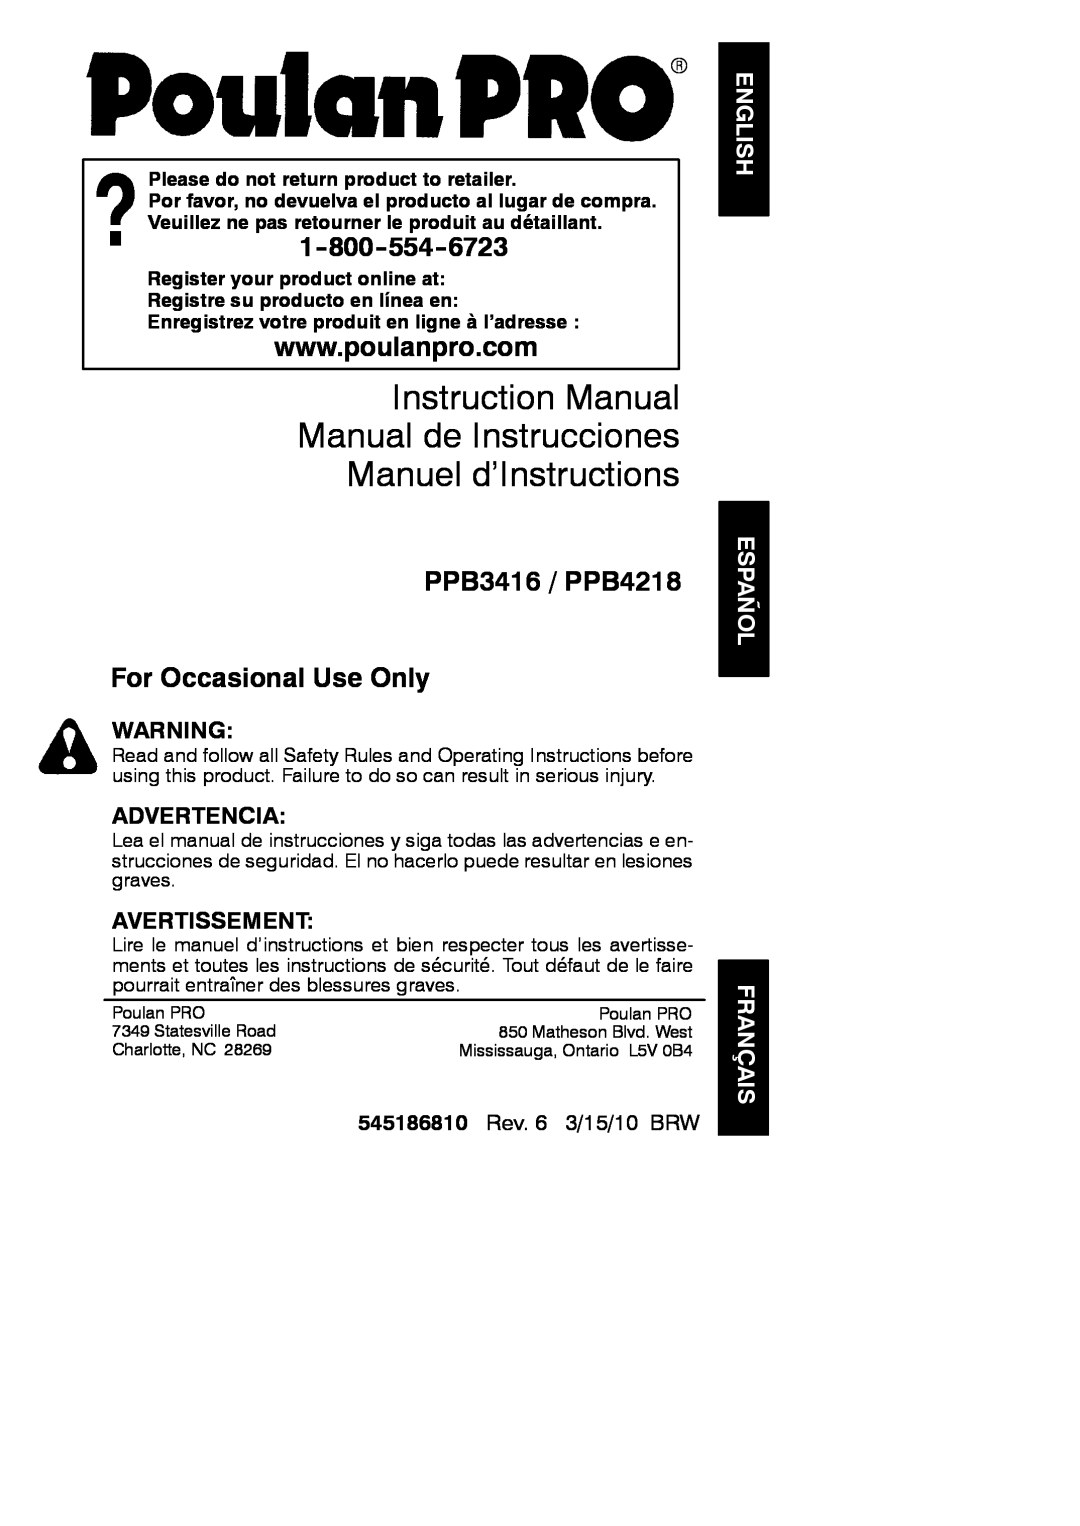 Poulan 952802062 instruction manual English Español Français, PPB3416 / PPB4218 For Occasional Use Only, Advertencia 